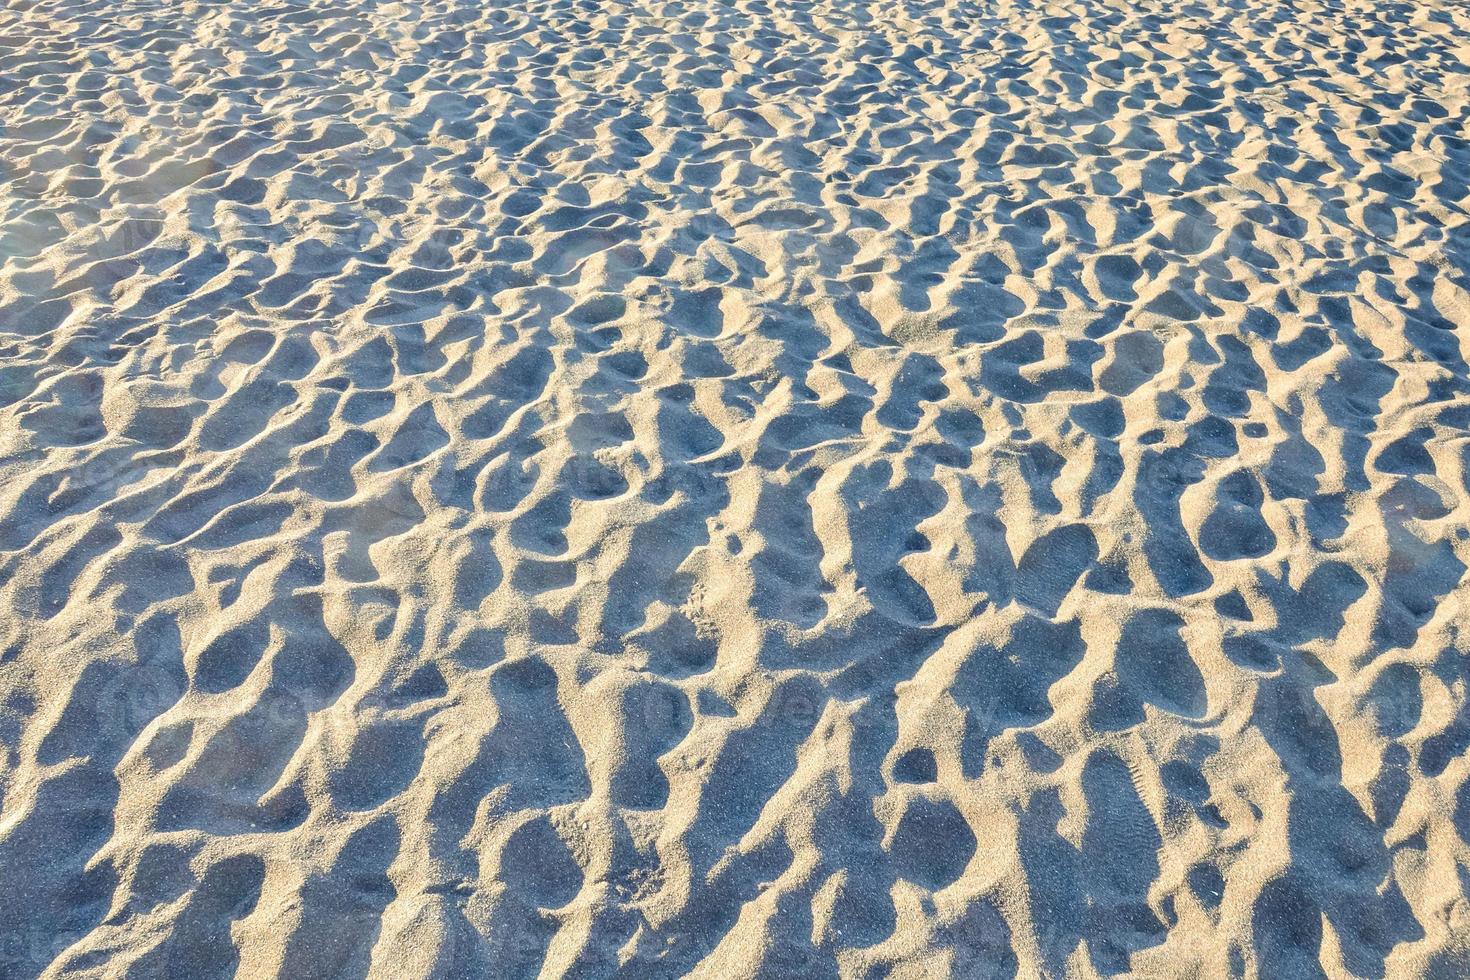 Beach sand close-up photo